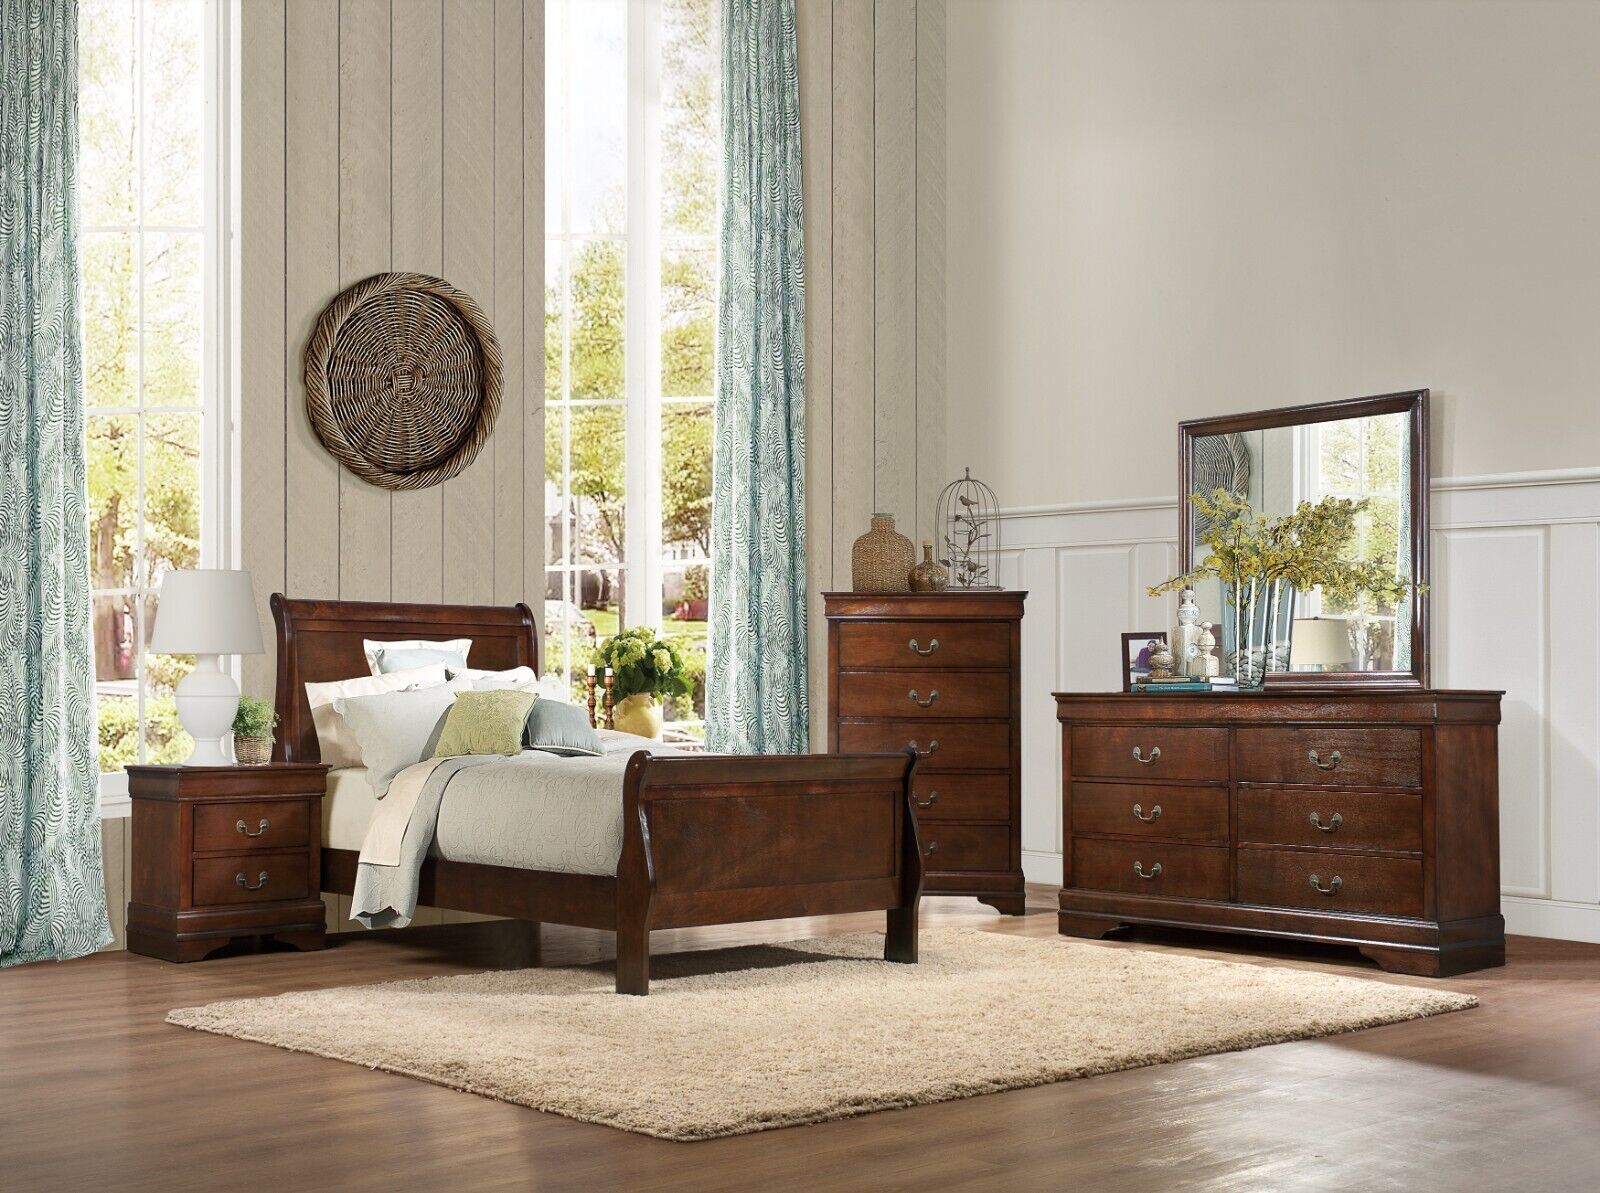 Esofastore Brown Cherry Finish 5pc Bedroom Set Louis Phillipe Twin Bed Two Nightstands Dresser Mirror Wooden Furniture